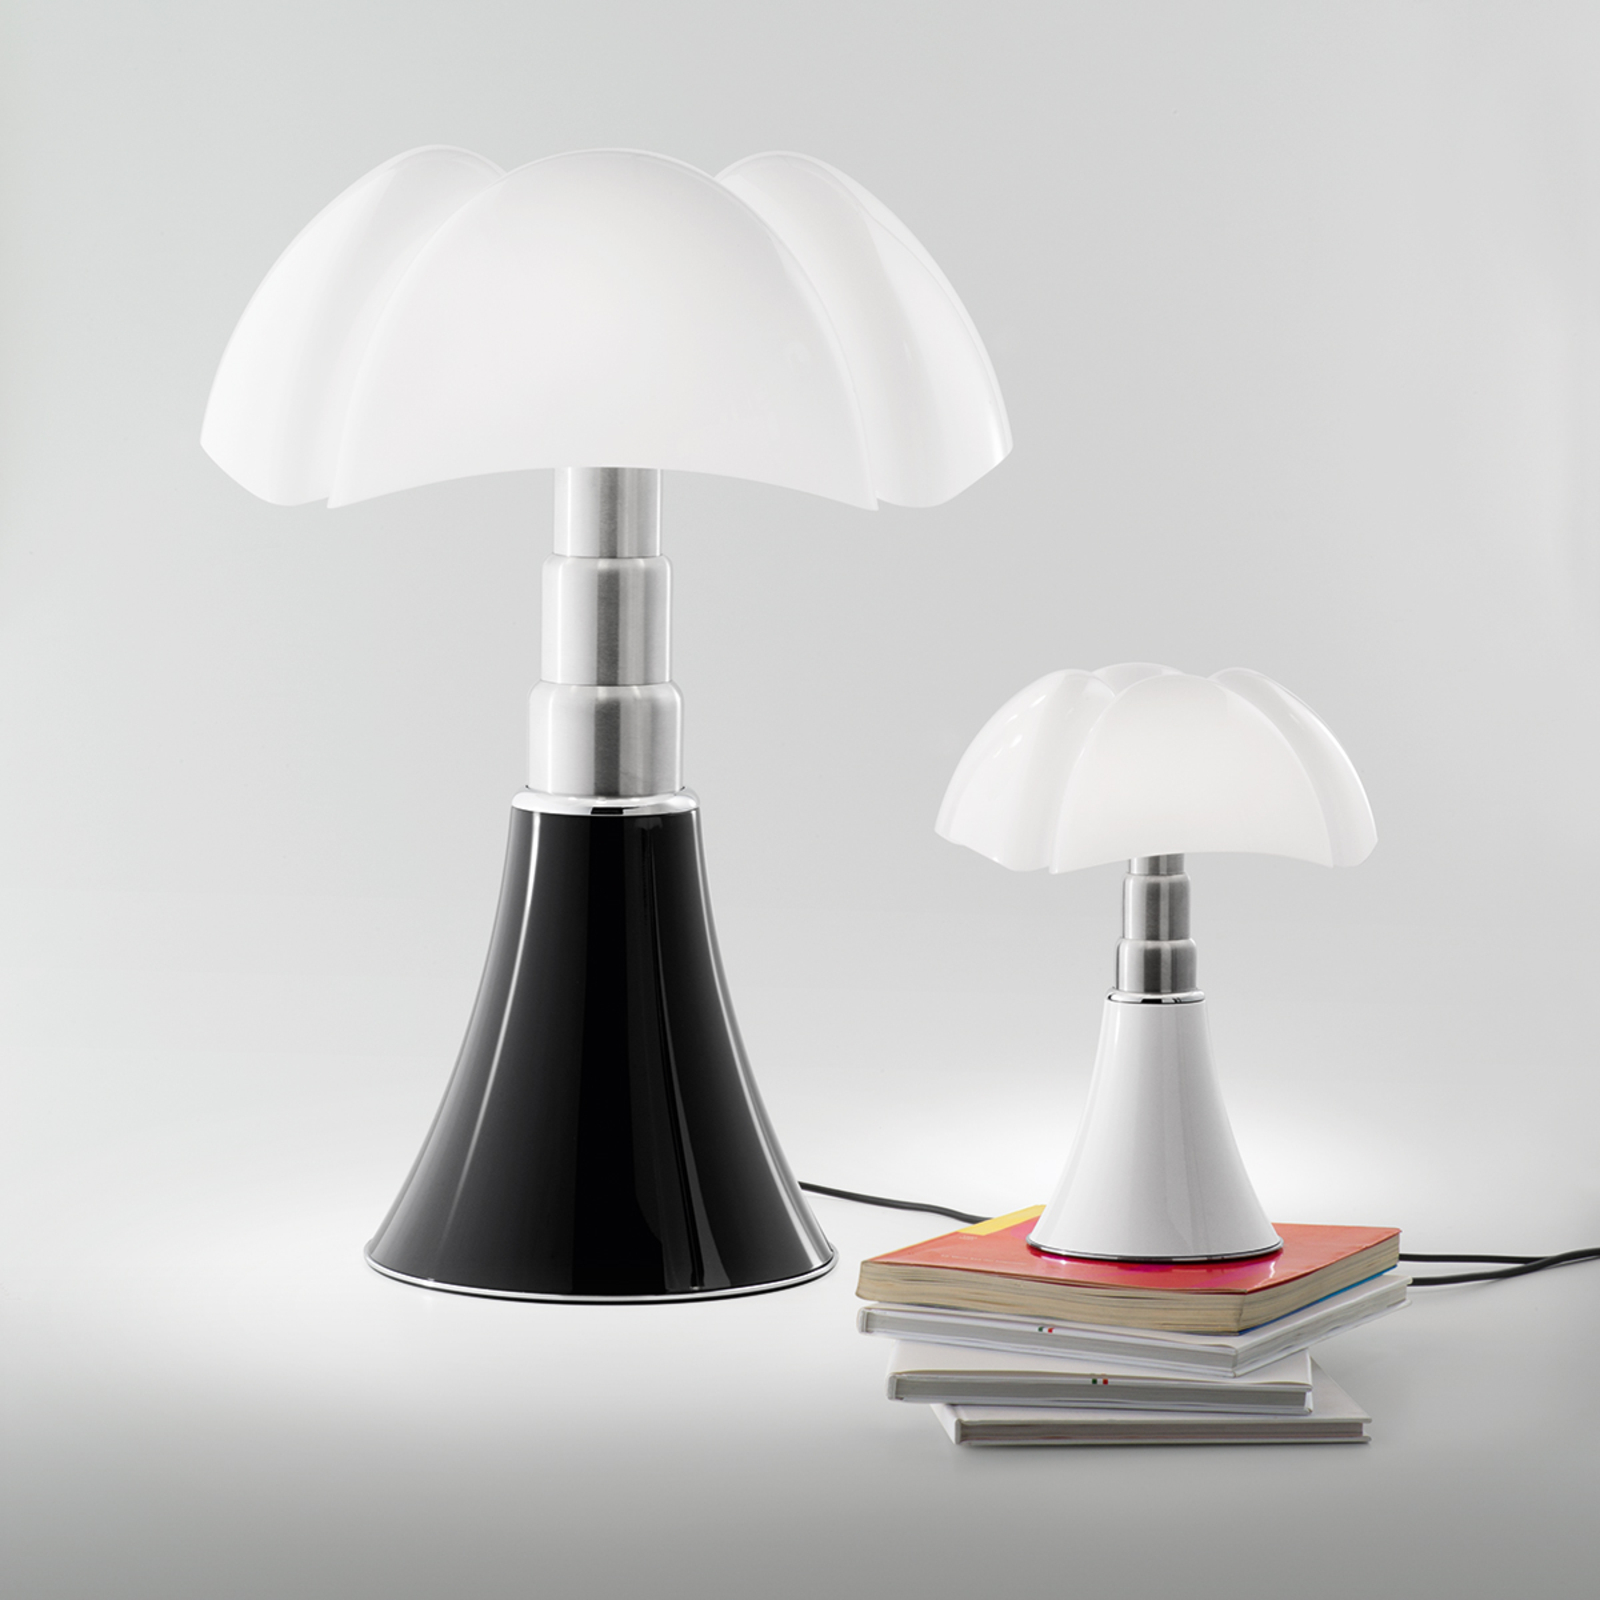 Martinelli Luce Pipistrello table lamp | Lights.co.uk